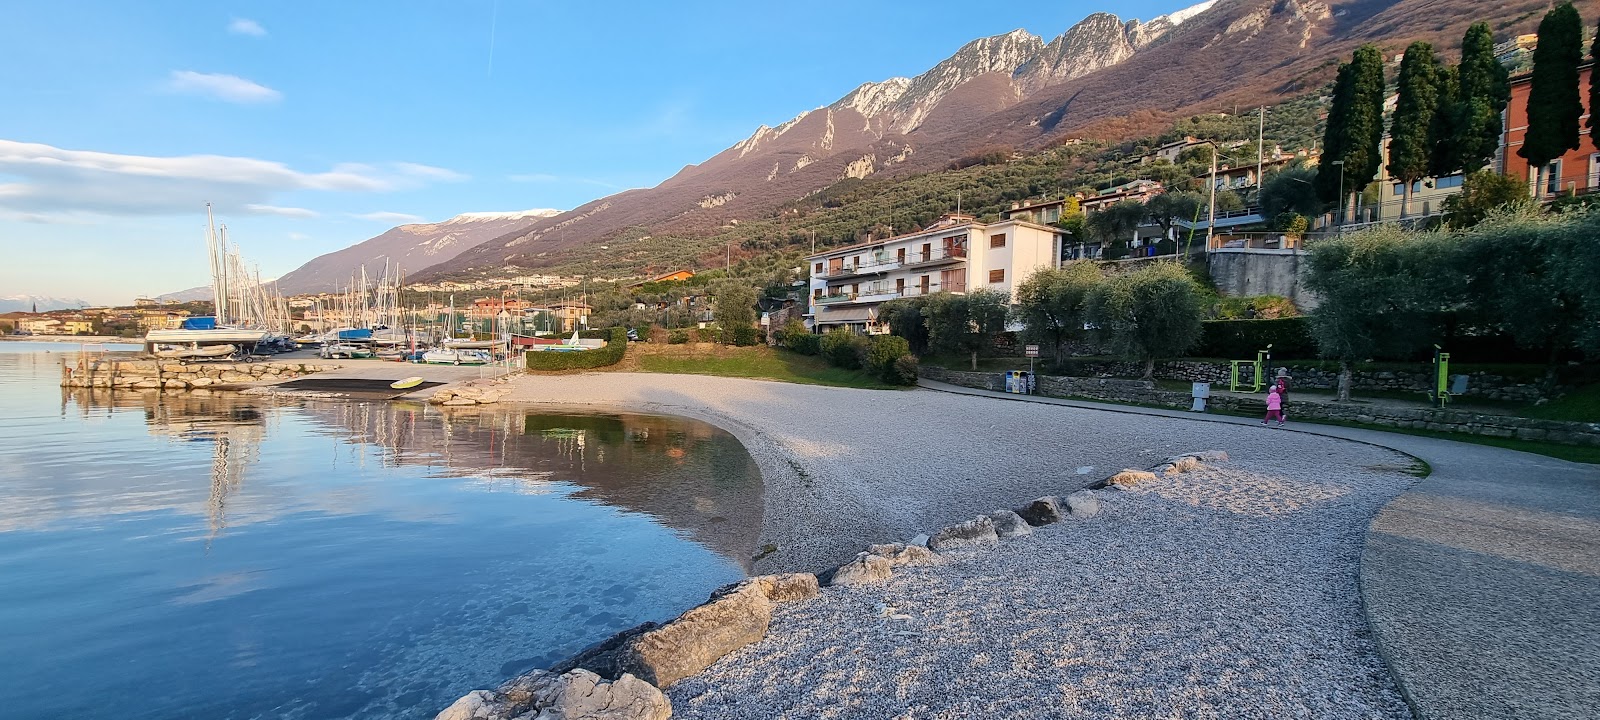 Spiaggia Acquafresca的照片 带有直岸